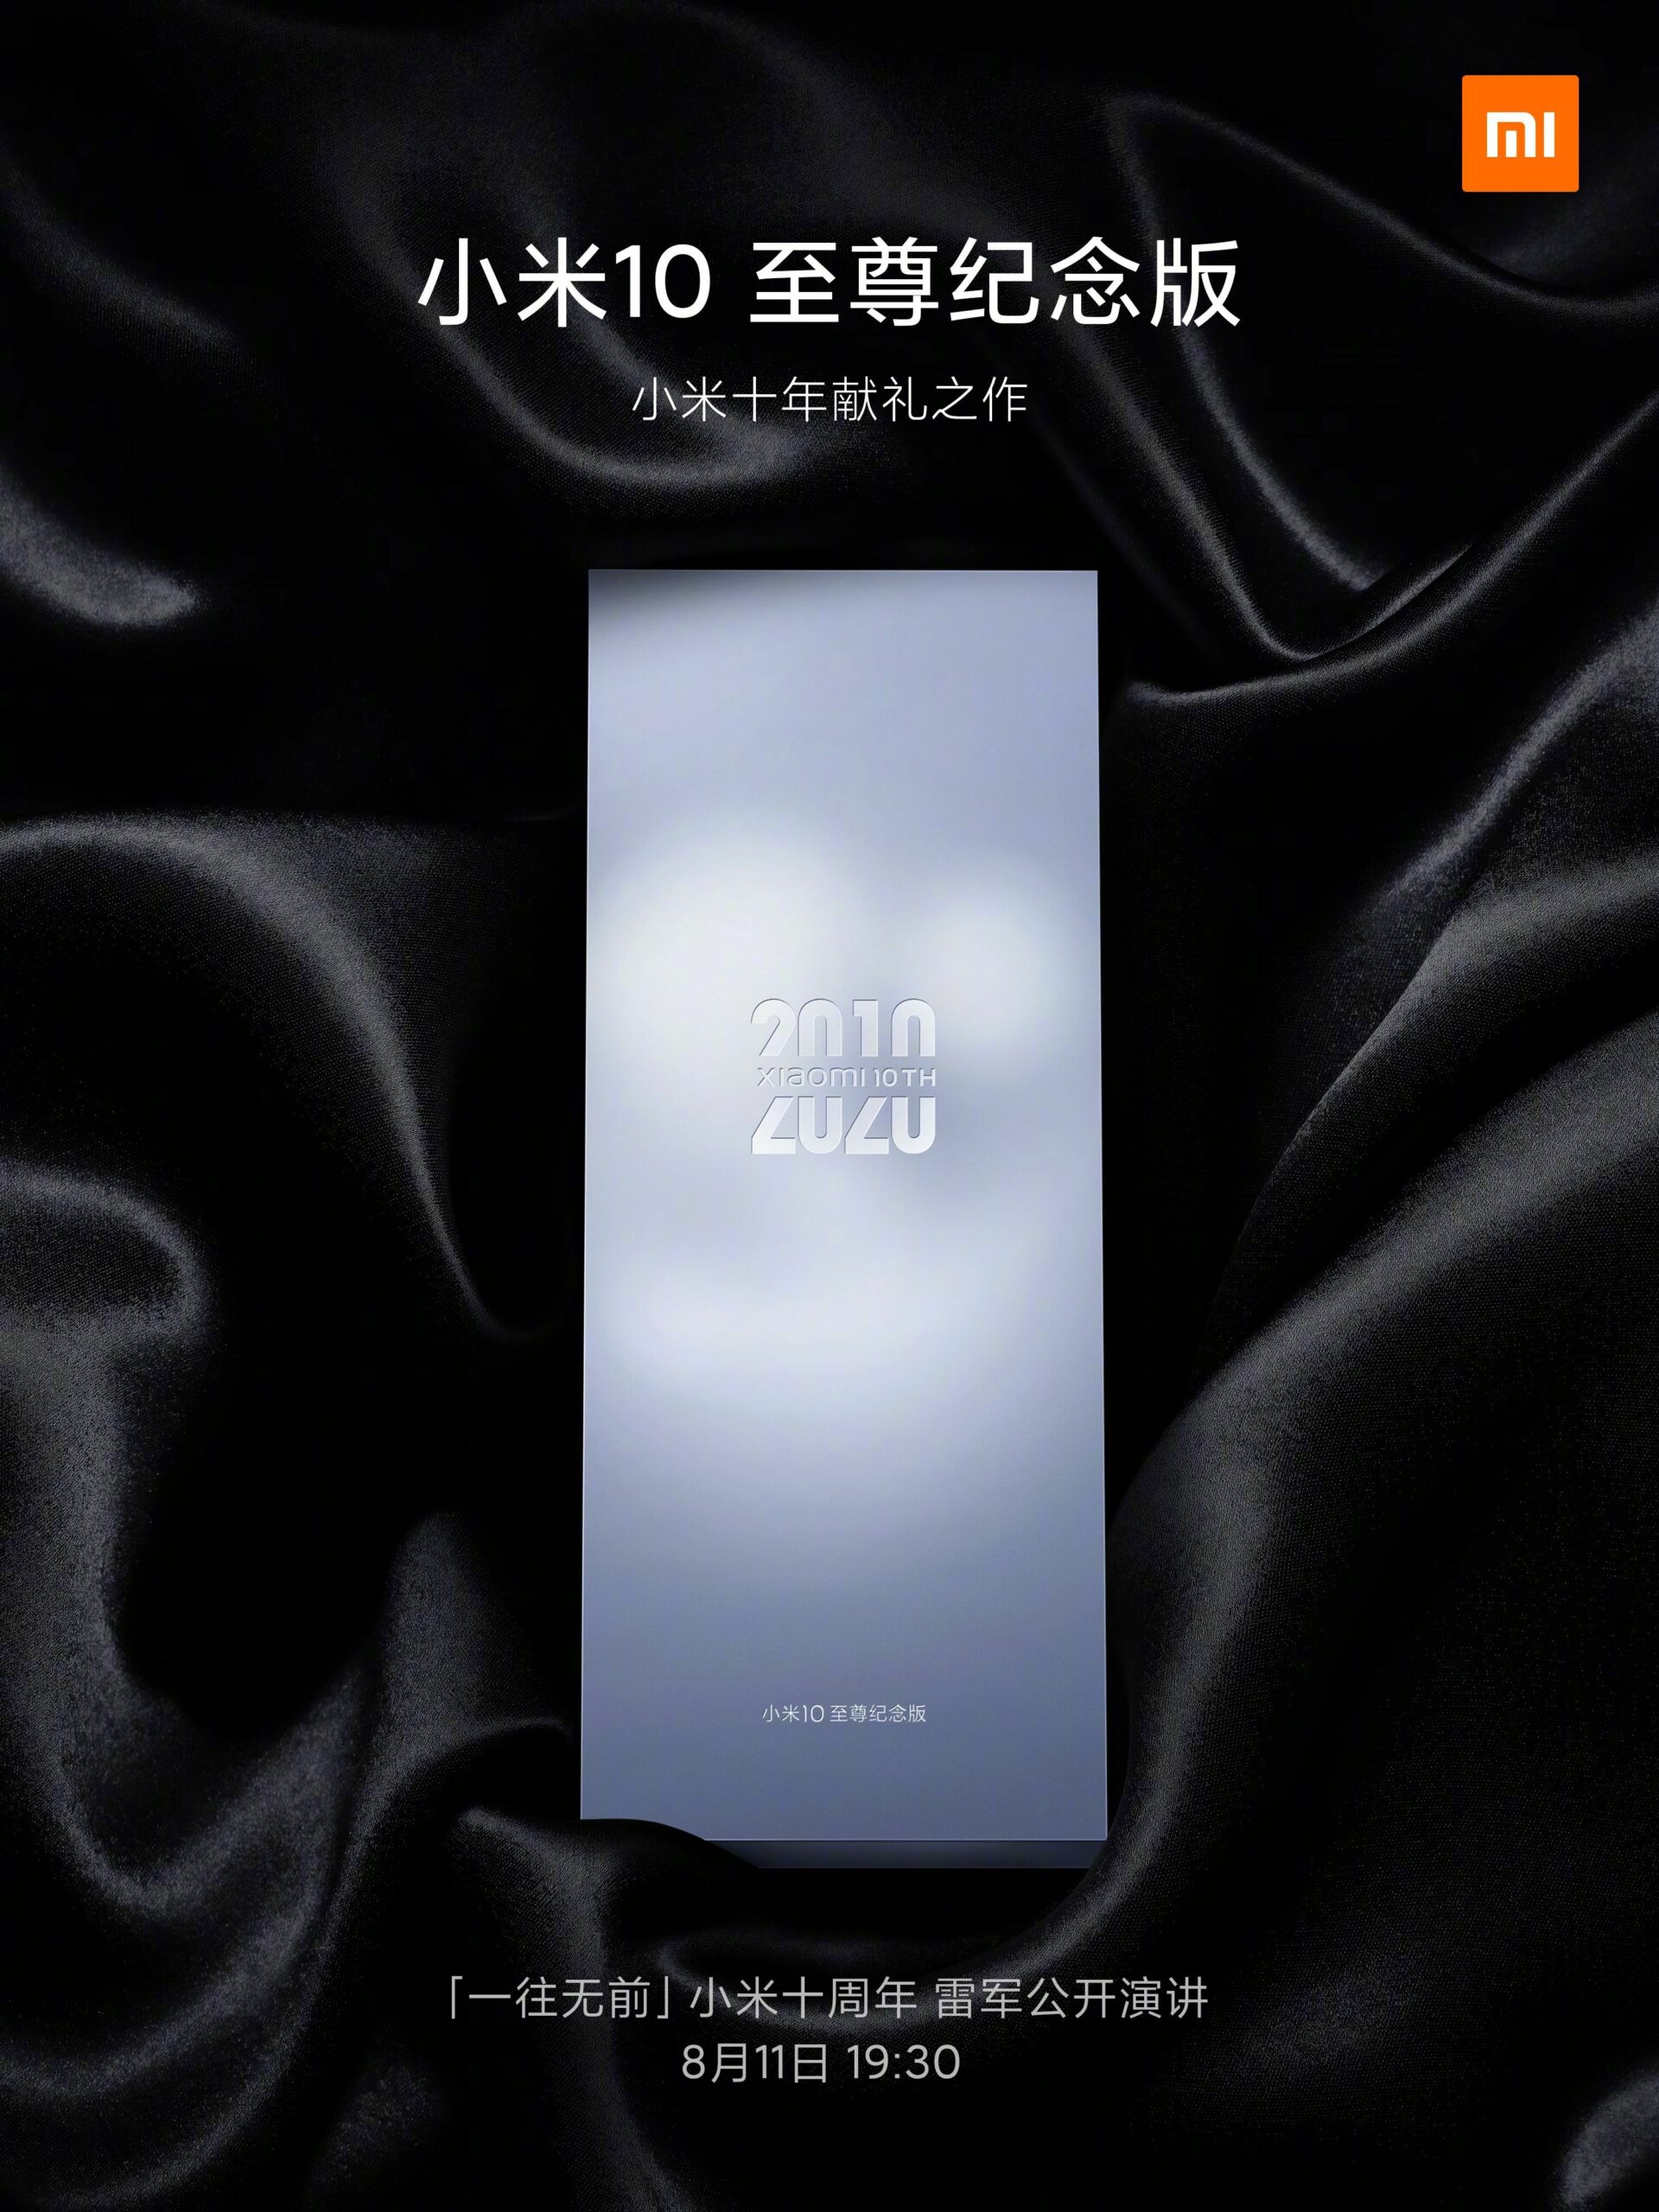 Xiaomi Mi 10 Extreme Memoremorative Edition في 11 أغسطس إطلاق